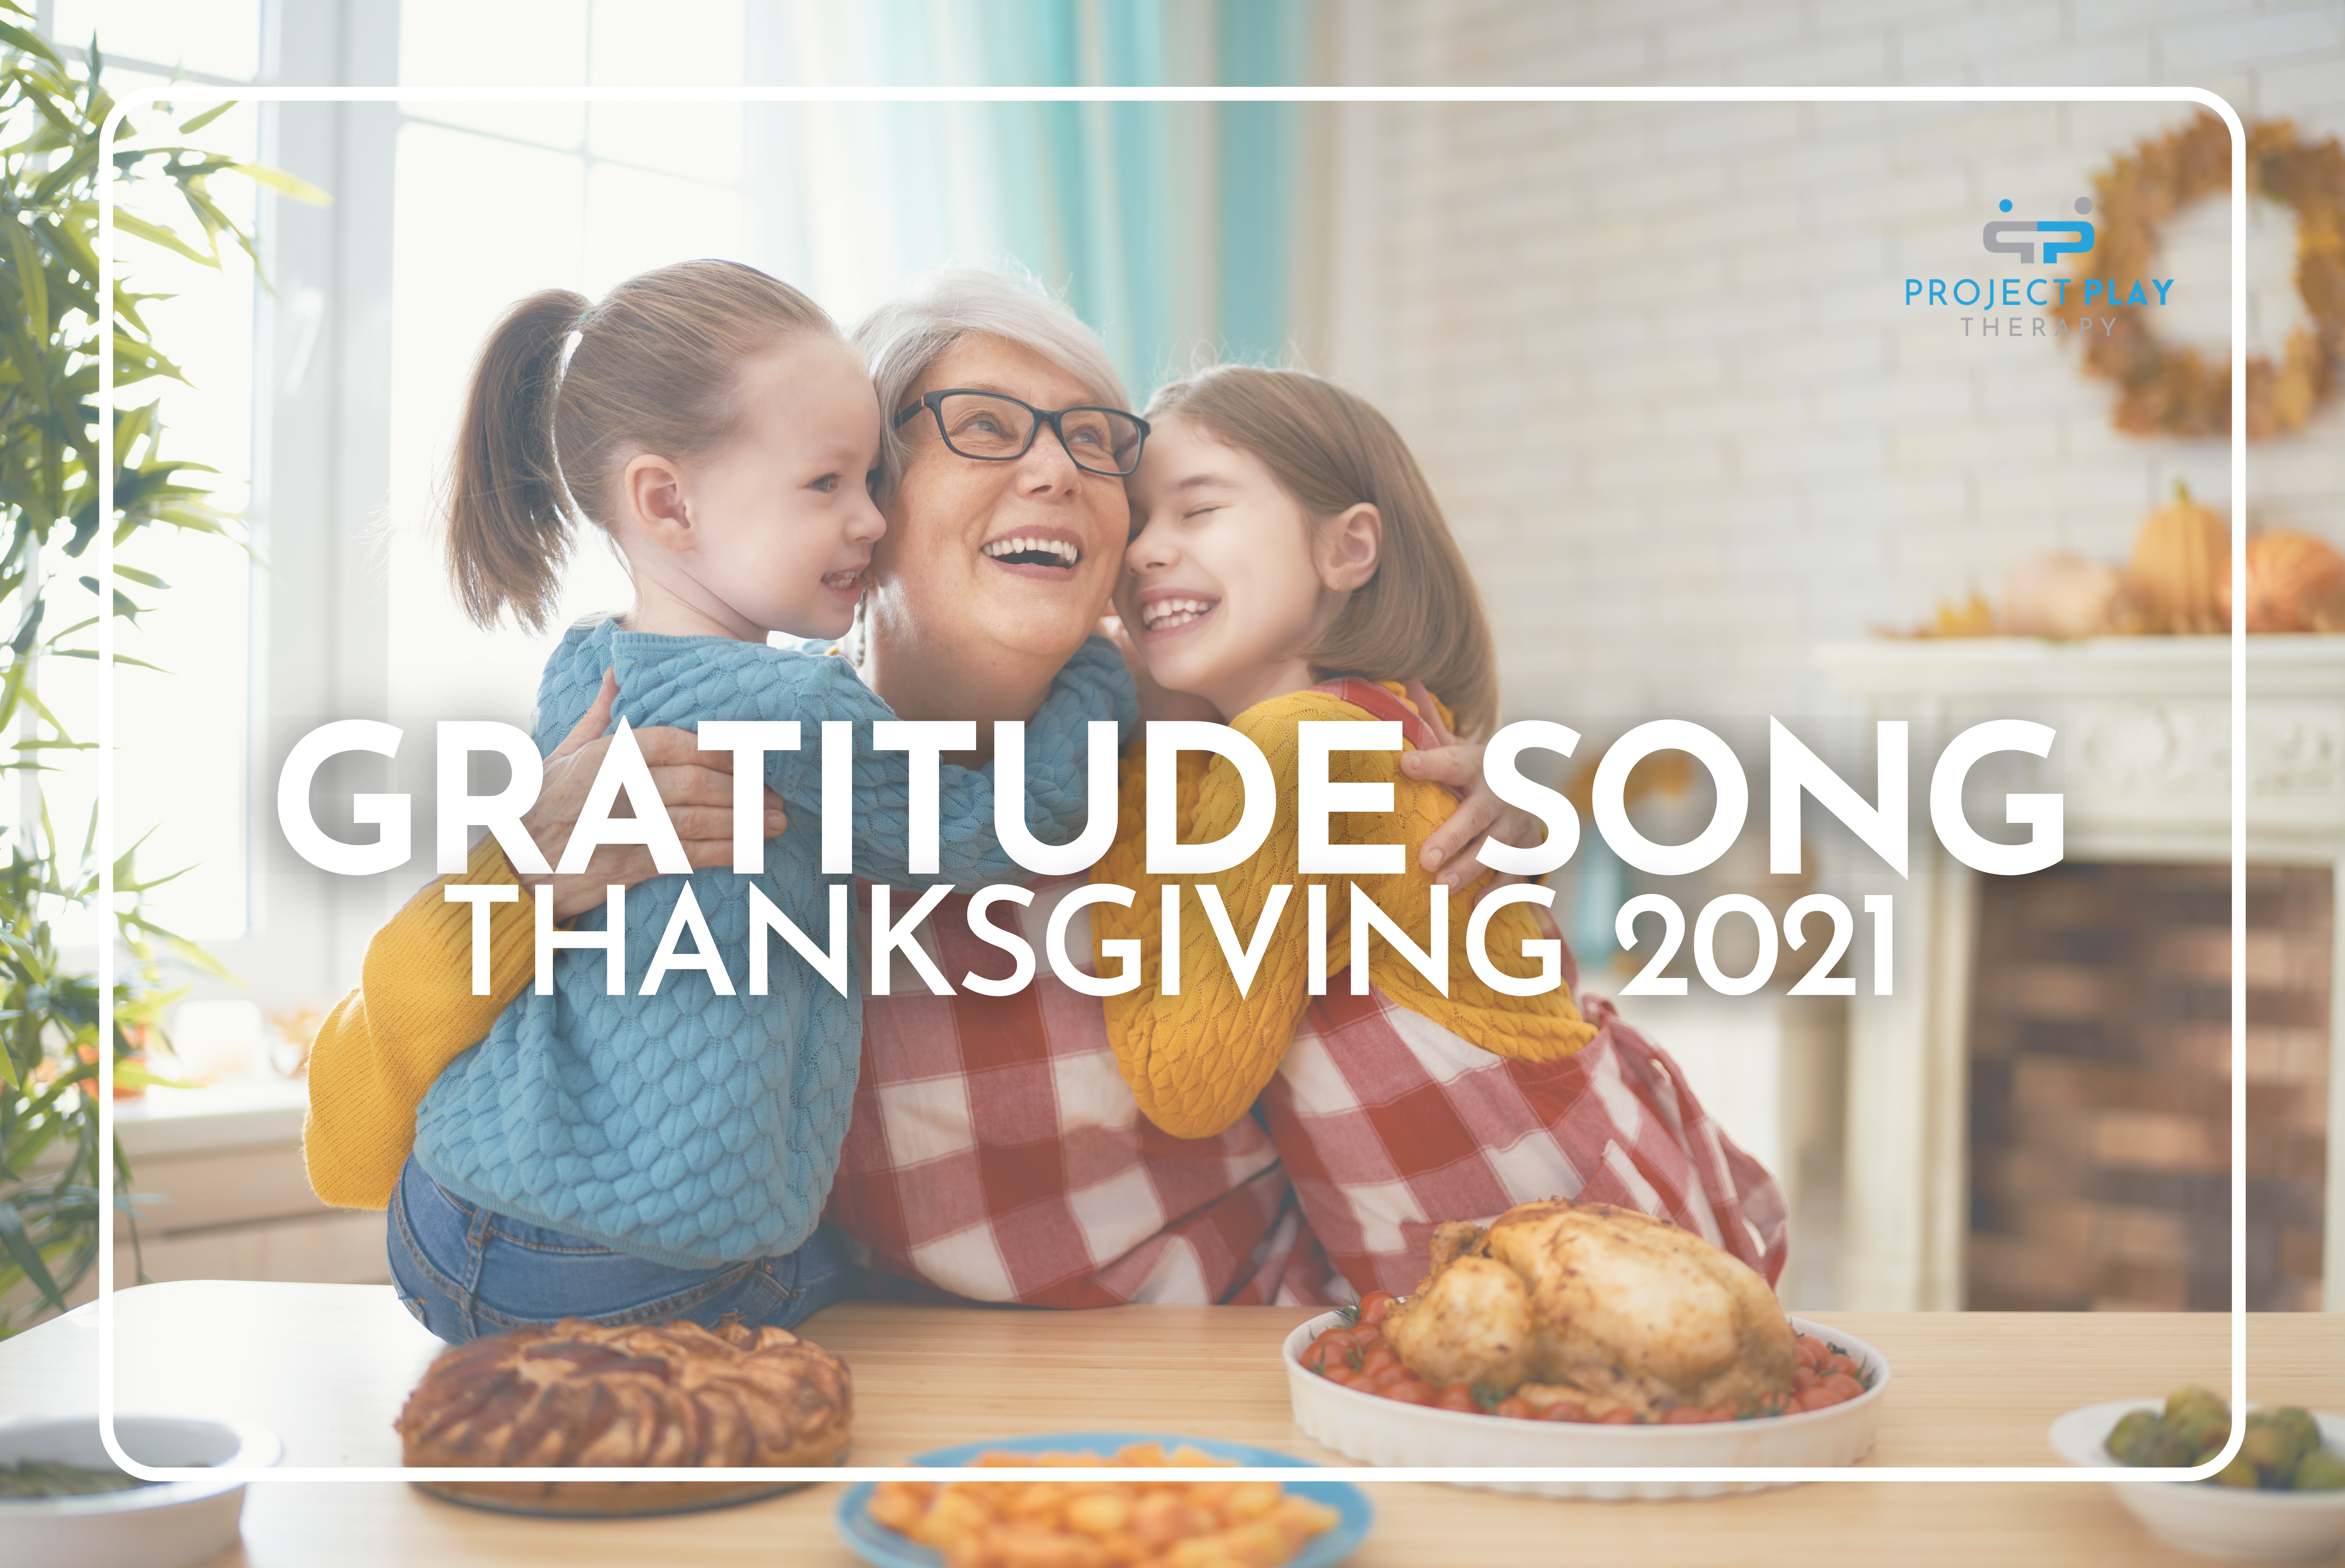 Gratitude Song: Thanksgiving 2021